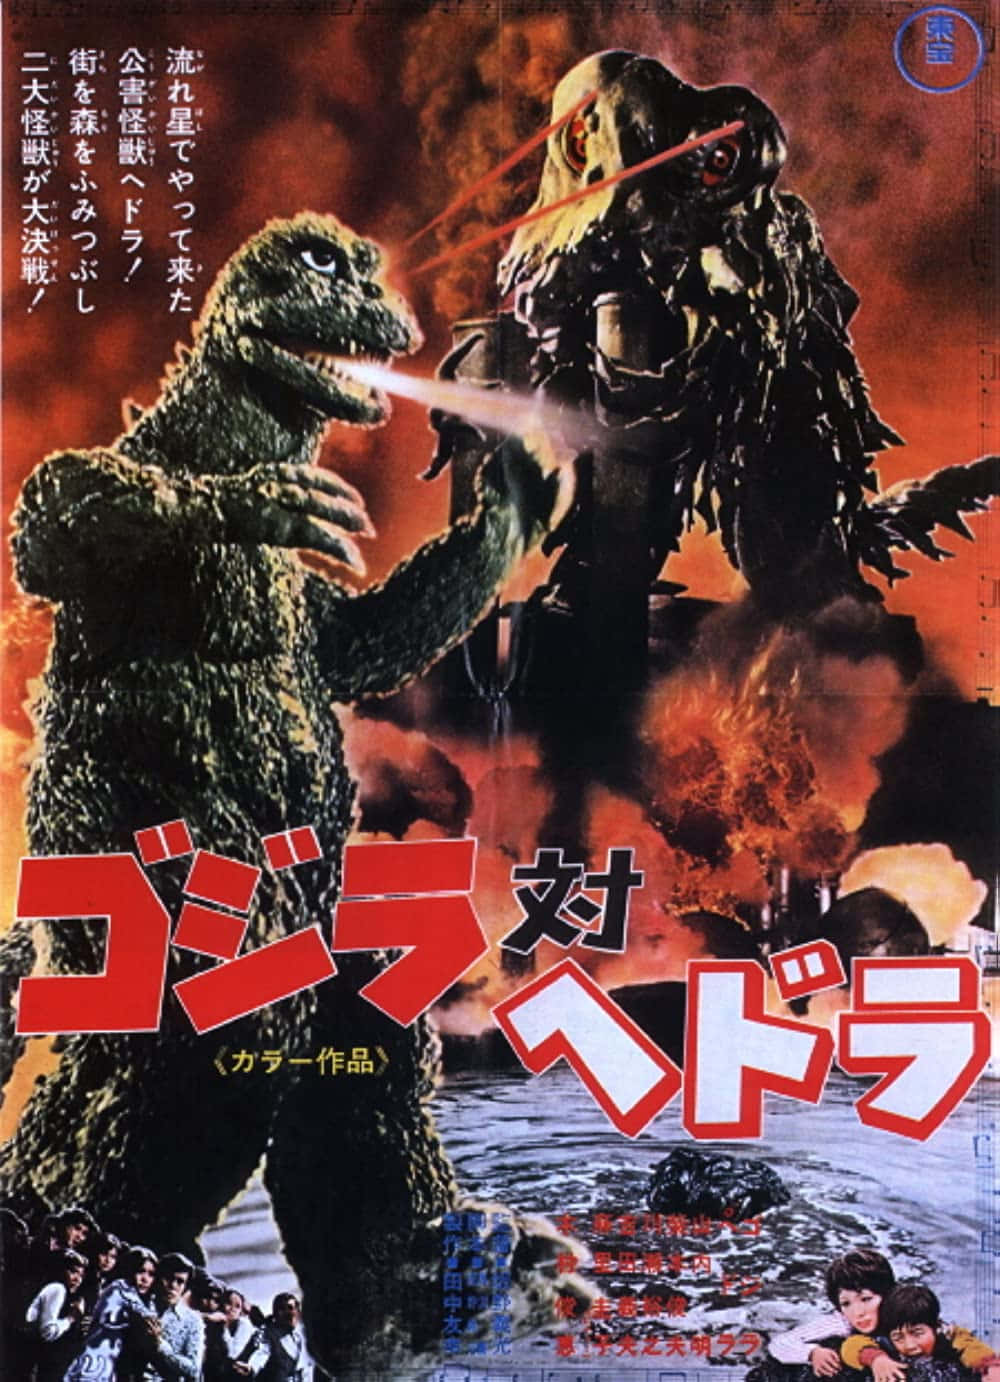 Godzilla battles Hedorah in an epic showdown Wallpaper